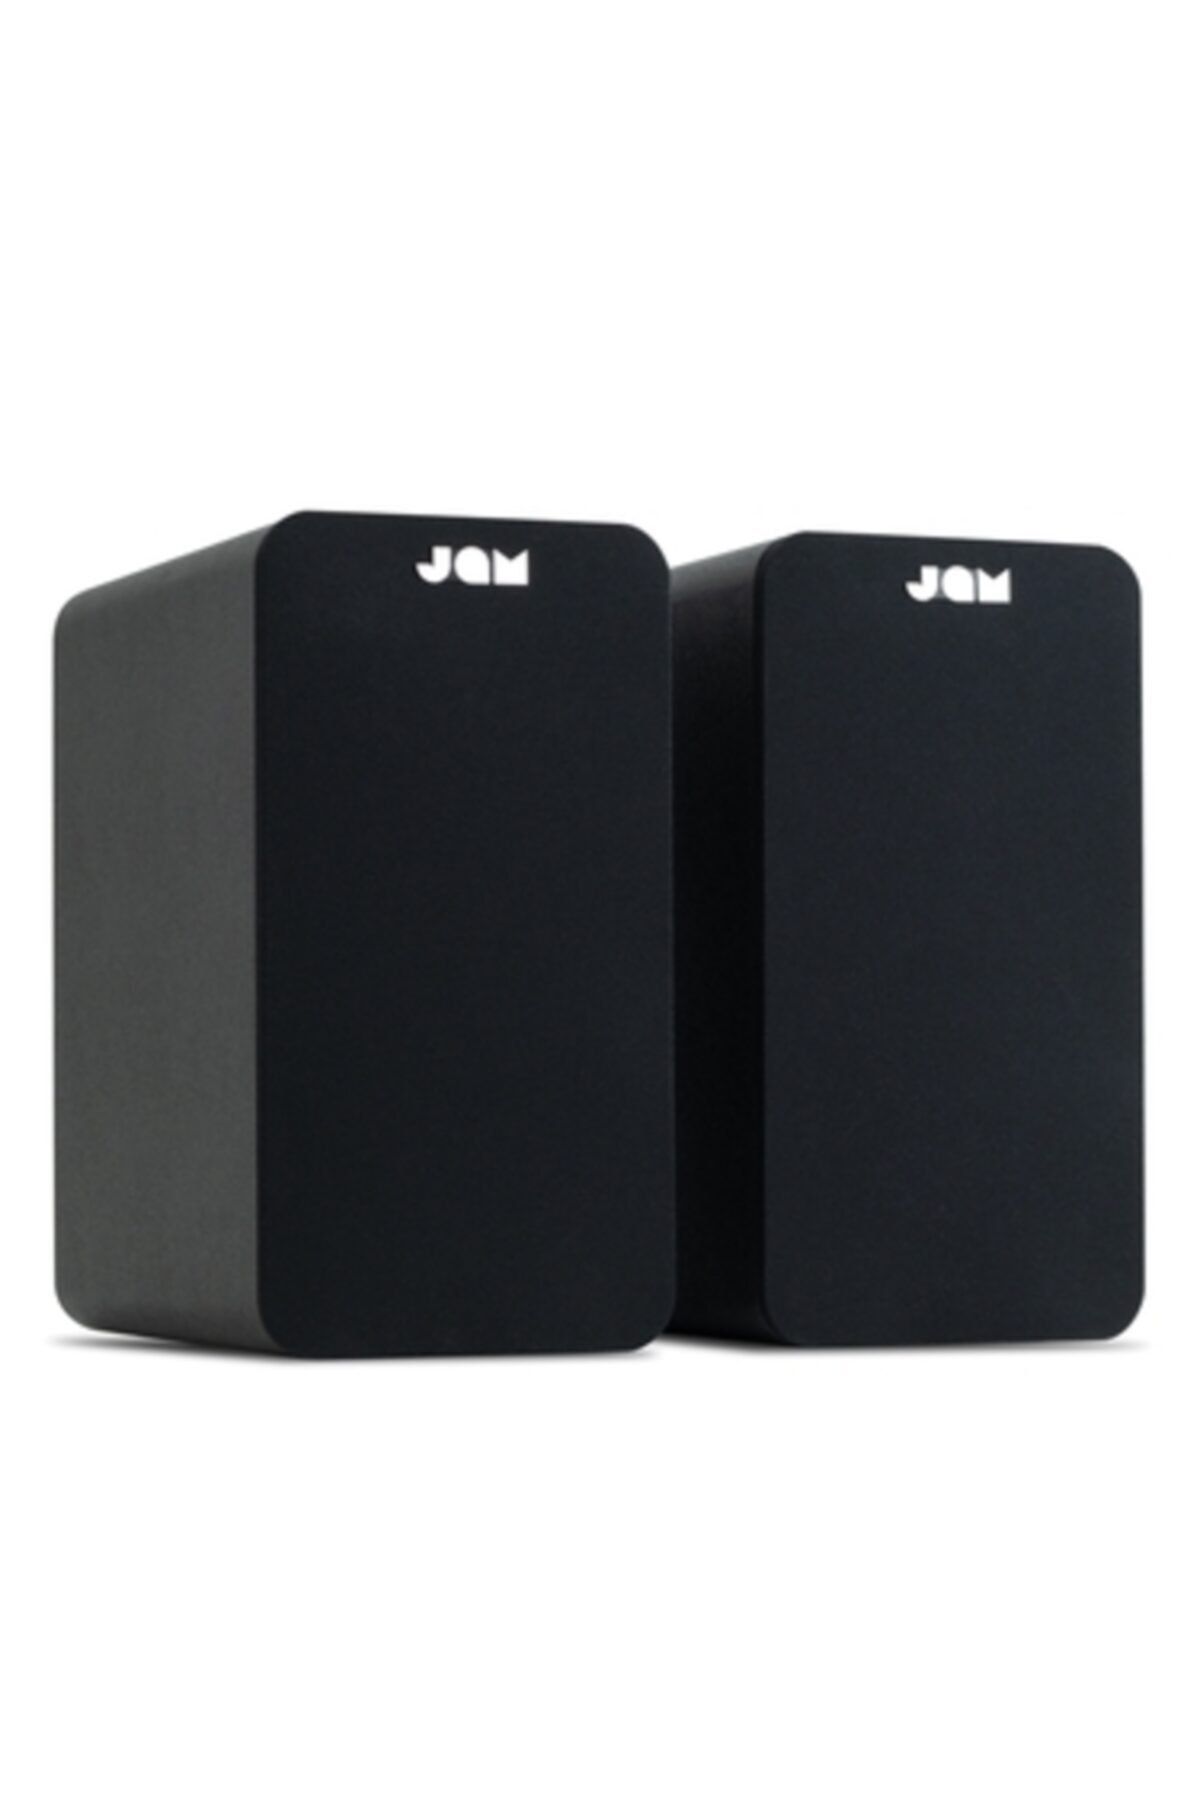 Jam Bookshelf Speaker, Bluetooth Aktif Hoparlör, Siyah, Hx-p400-bk-eu